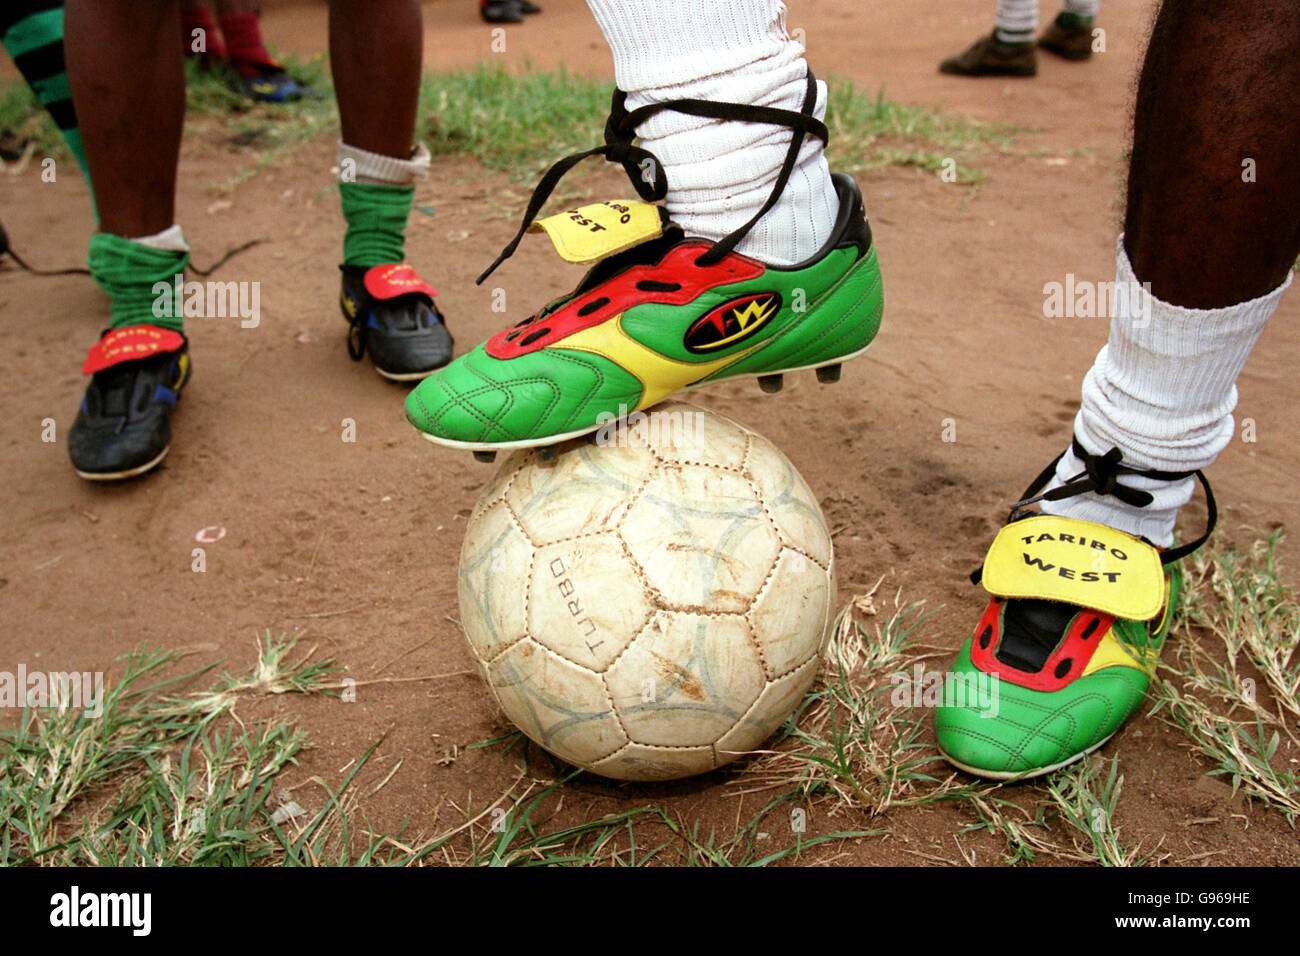 Soccer - FIFA World Youth Championships - Nigeria '99 - Taribo West Academy Stock Photo